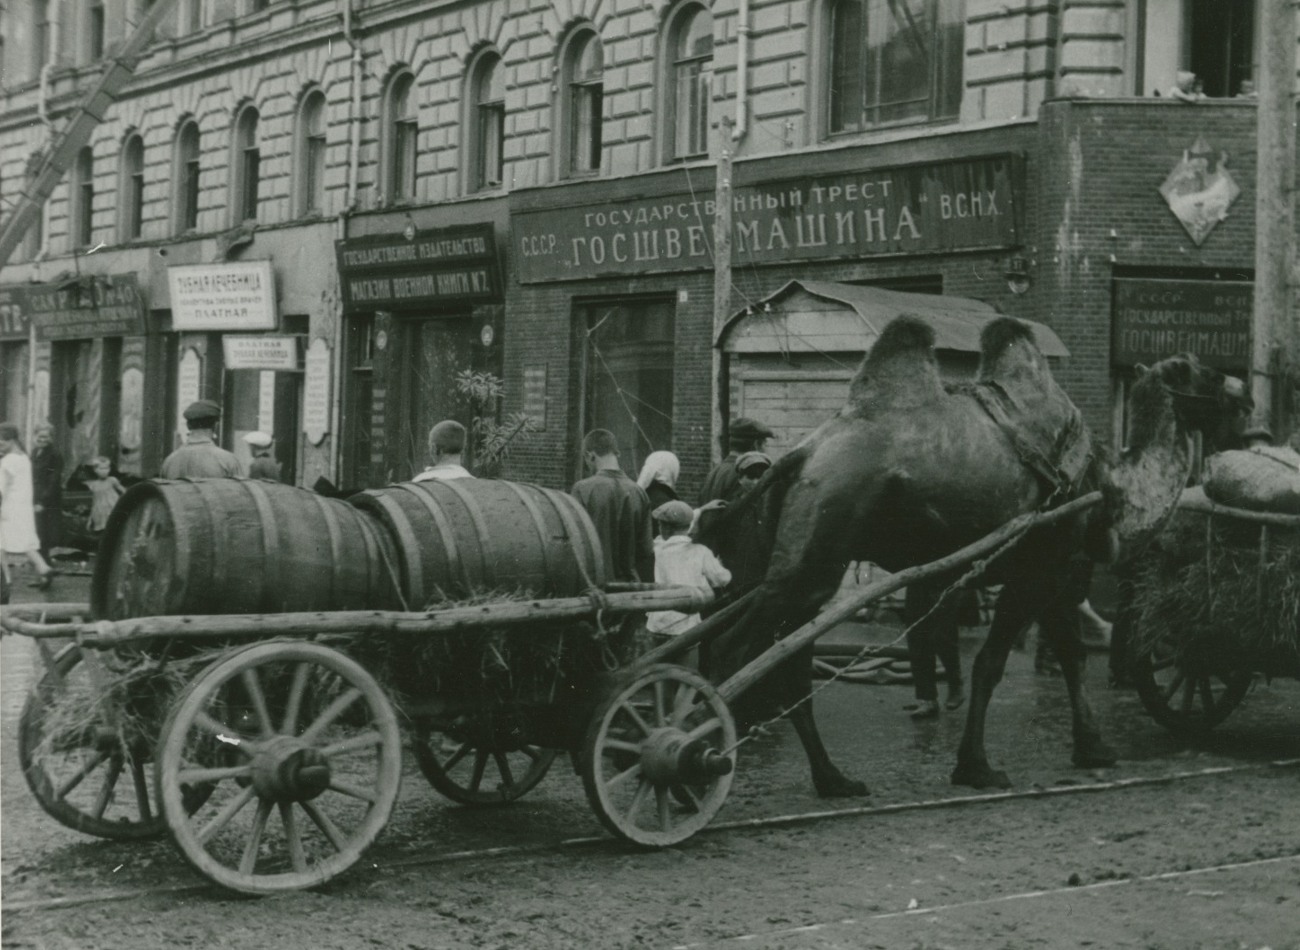 Повозки с верблюдами рядом с гостиницей Националь, ул. Ленинградская Фрунзе, Самара, фото Ф. Феттер, 1930 г